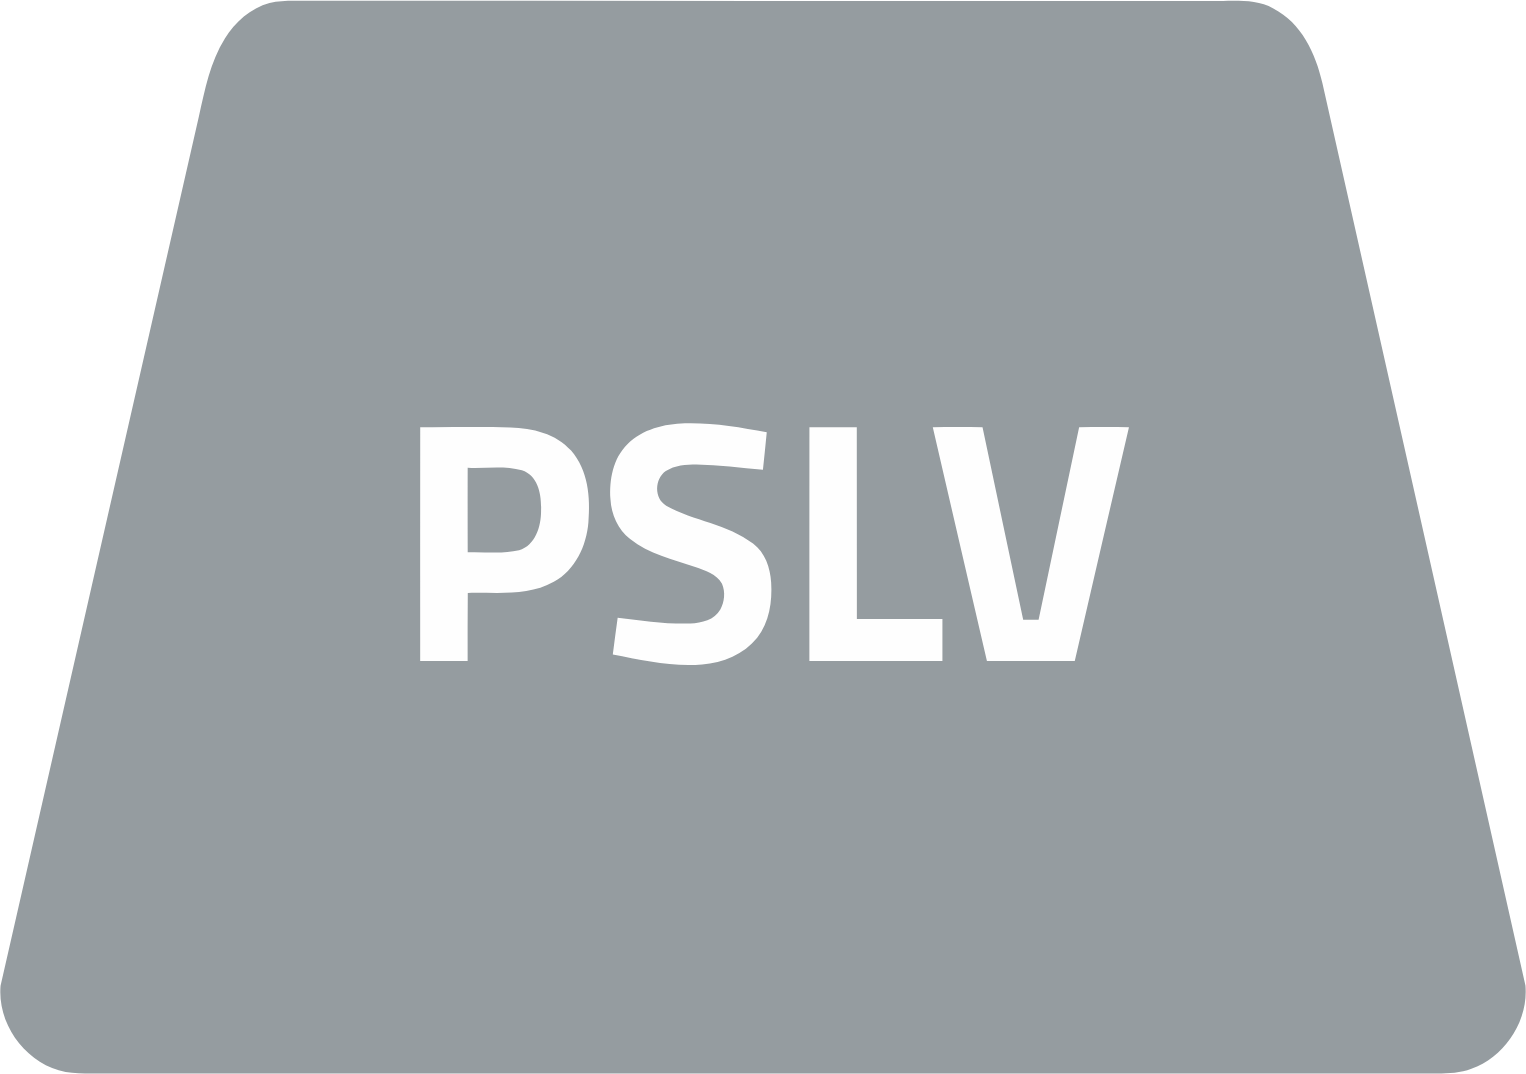 Sprott Physical Silver Trust (PSLV) logo (transparent PNG)